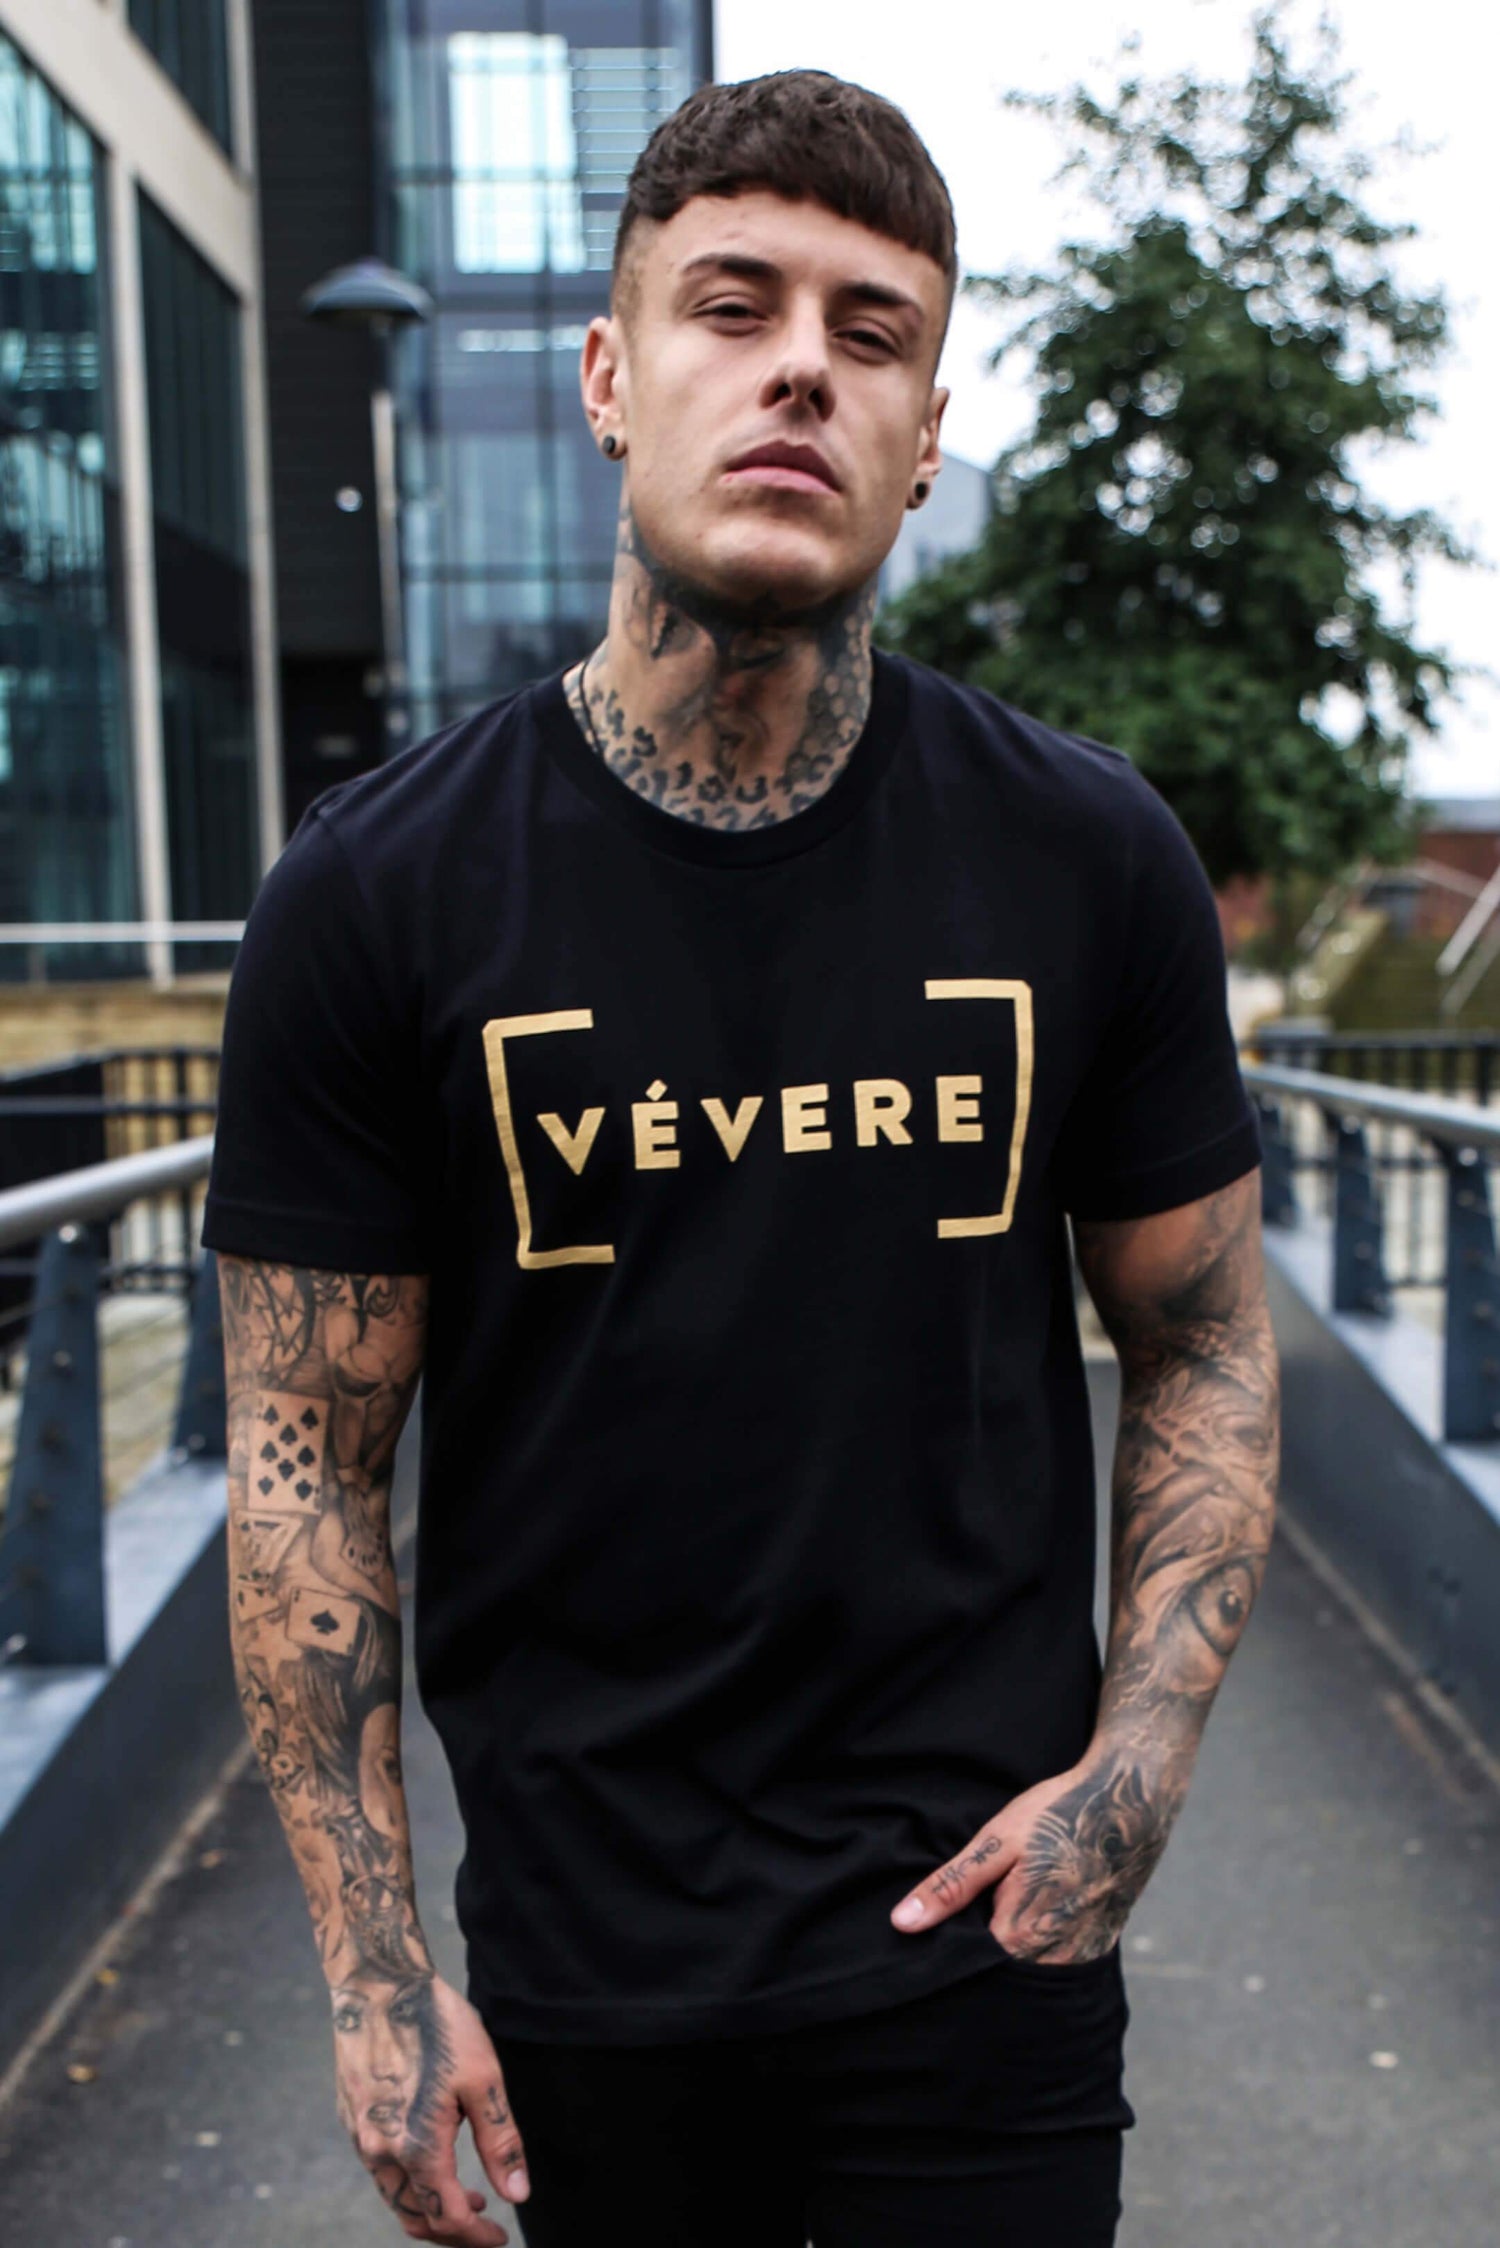 Nero Peach T-Shirt front 2 - Vevere